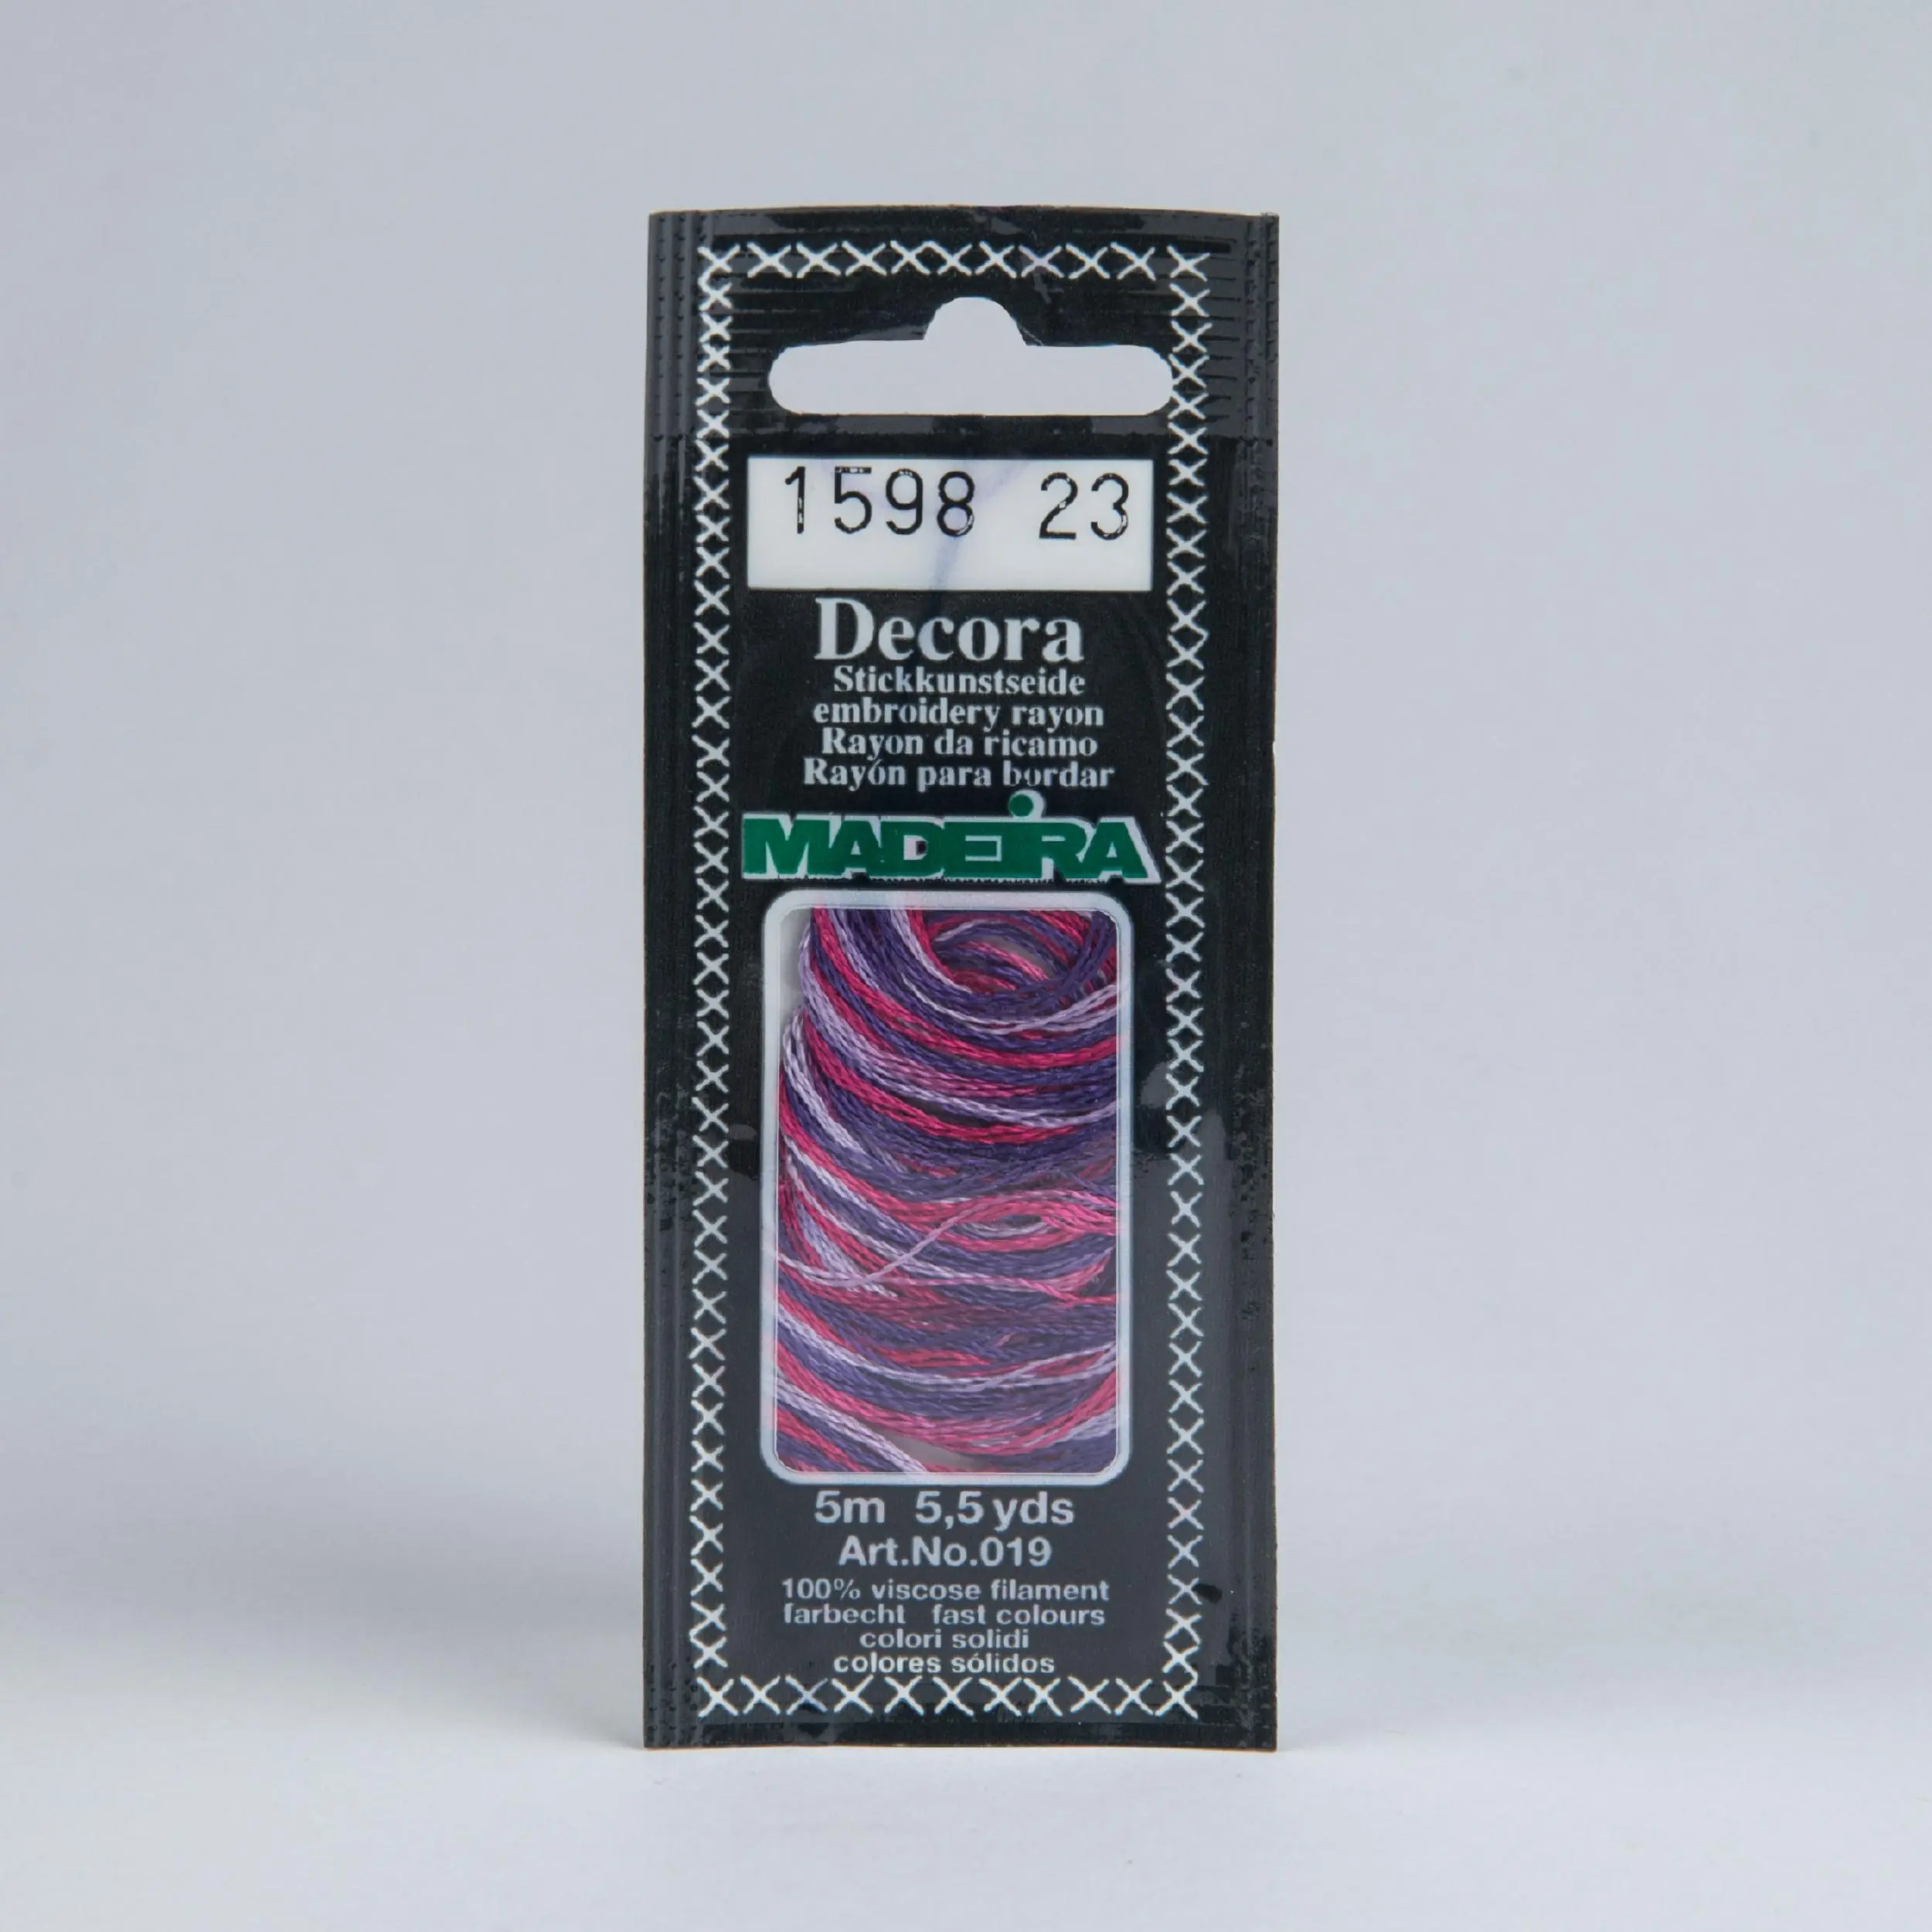  1598 Petunia Decora Madeira 5 m 4-х шарові філамент 100% віскоза